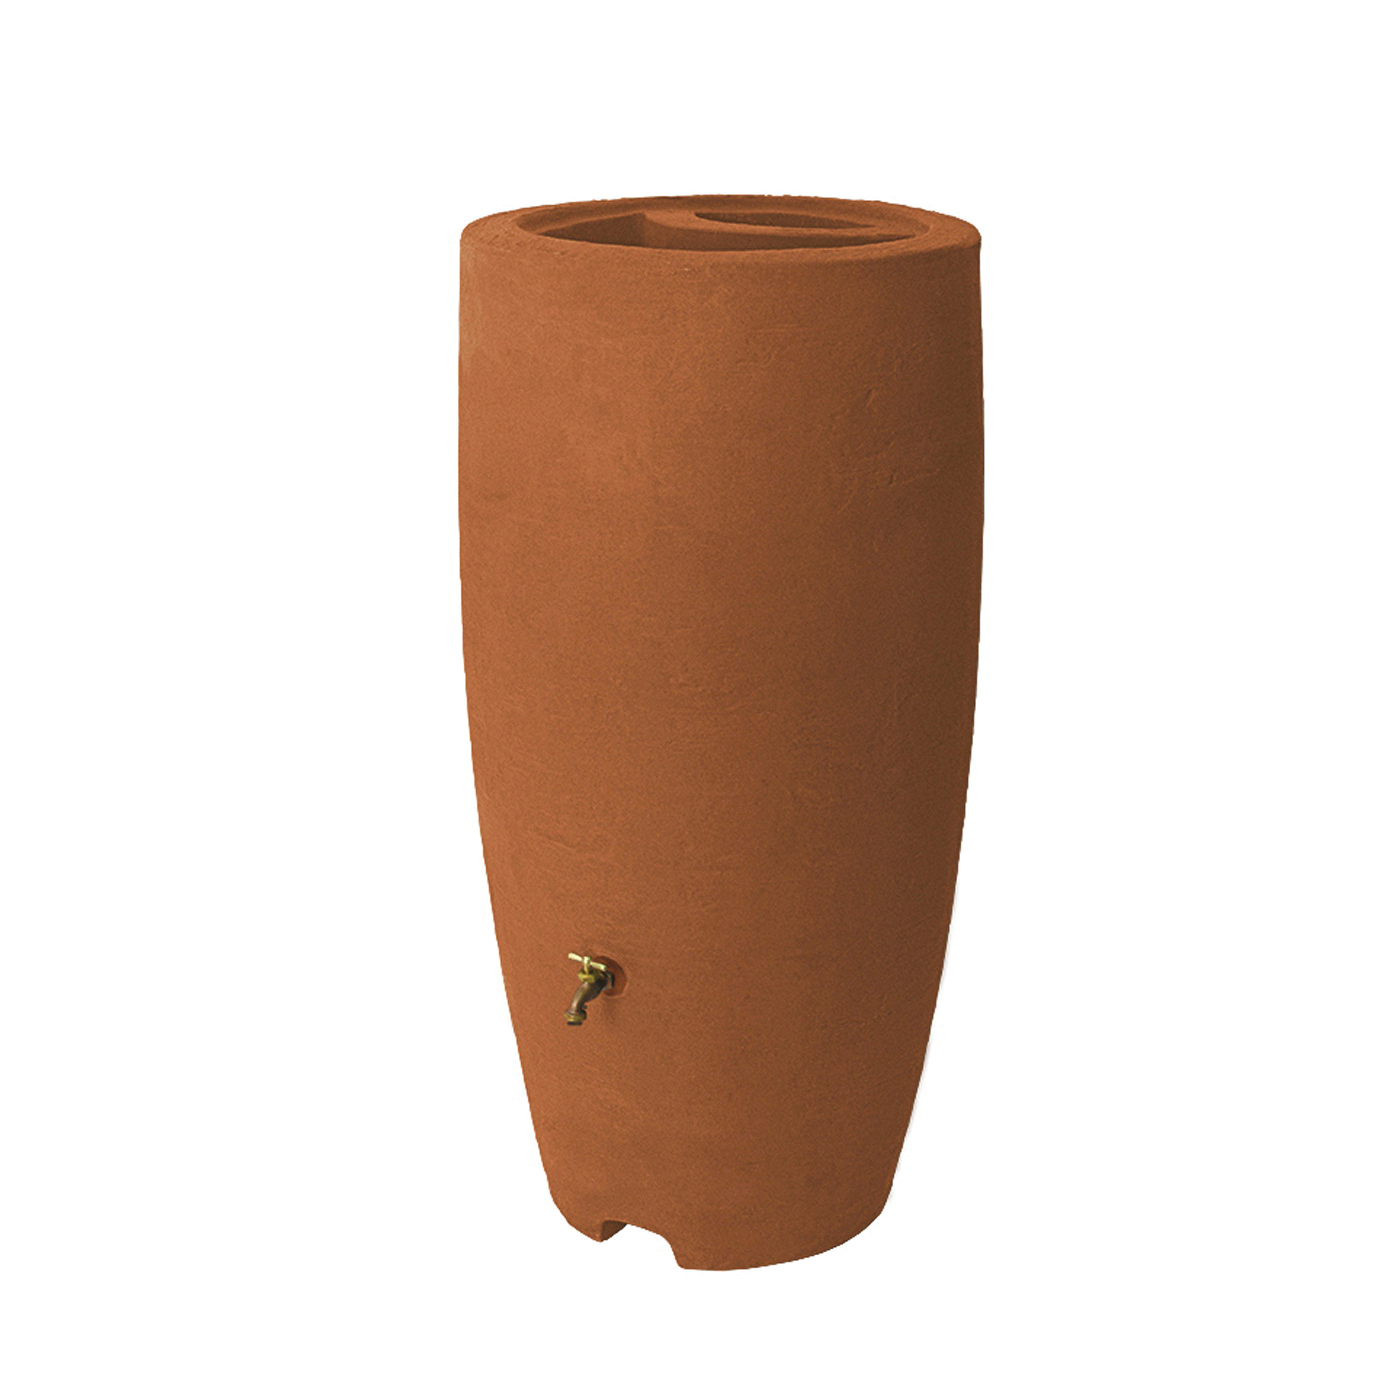 86001 Rain Barrel, 80 gal Capacity, Plastic, Terracotta